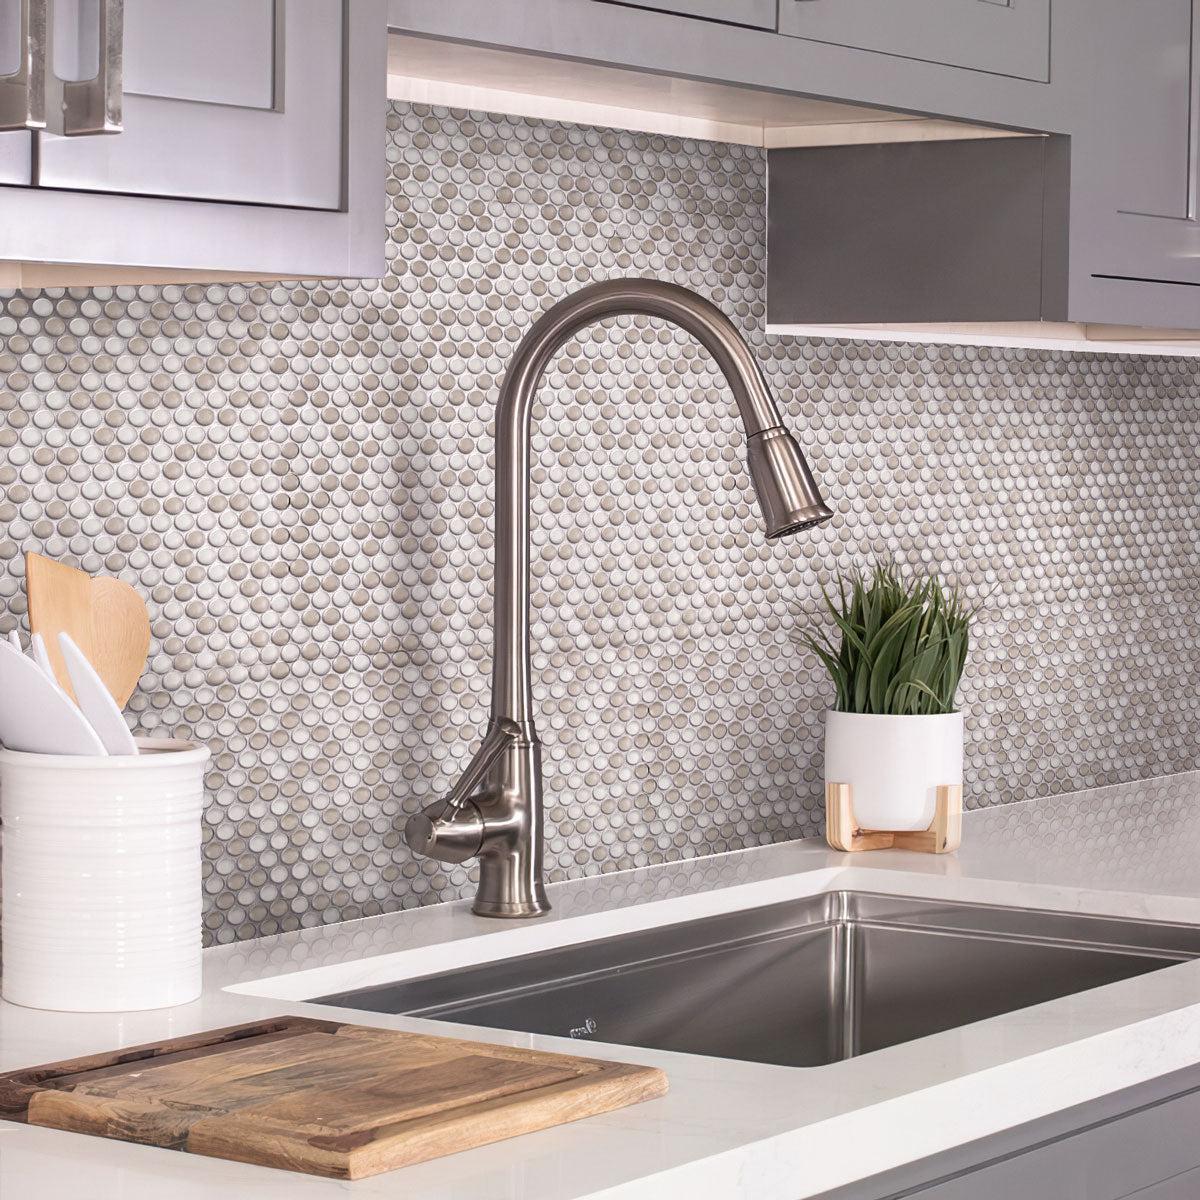 Grey & White Kitchen with Cream Penny Recycled Glass Mosaic Tile Backsplash